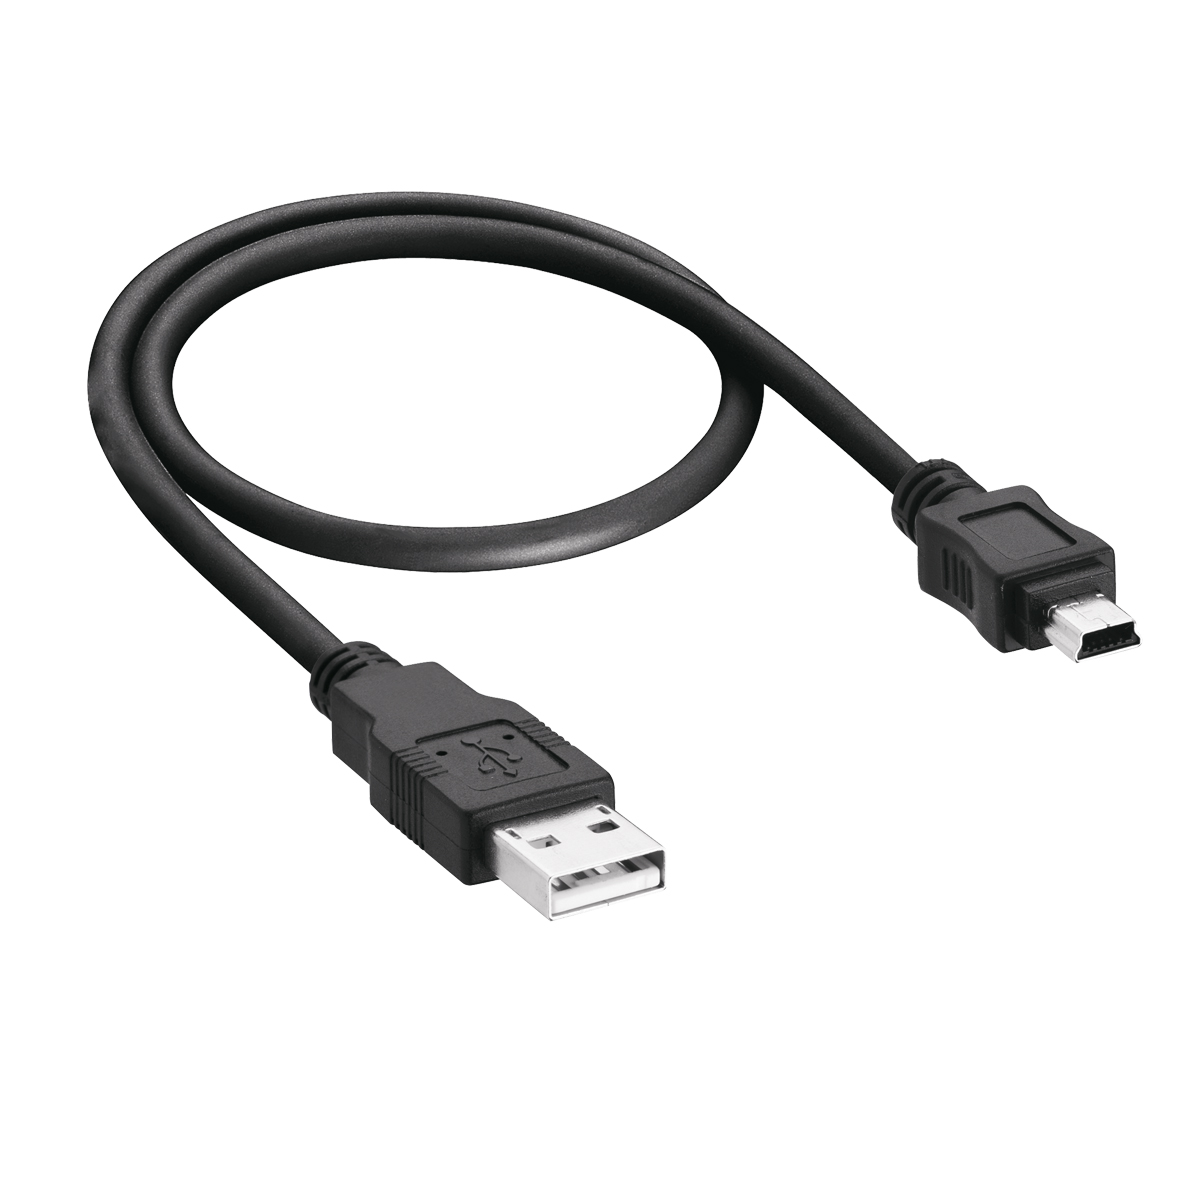 Lumberg: 2480 (Series 24 | USB and IEEE 1394 connectors)